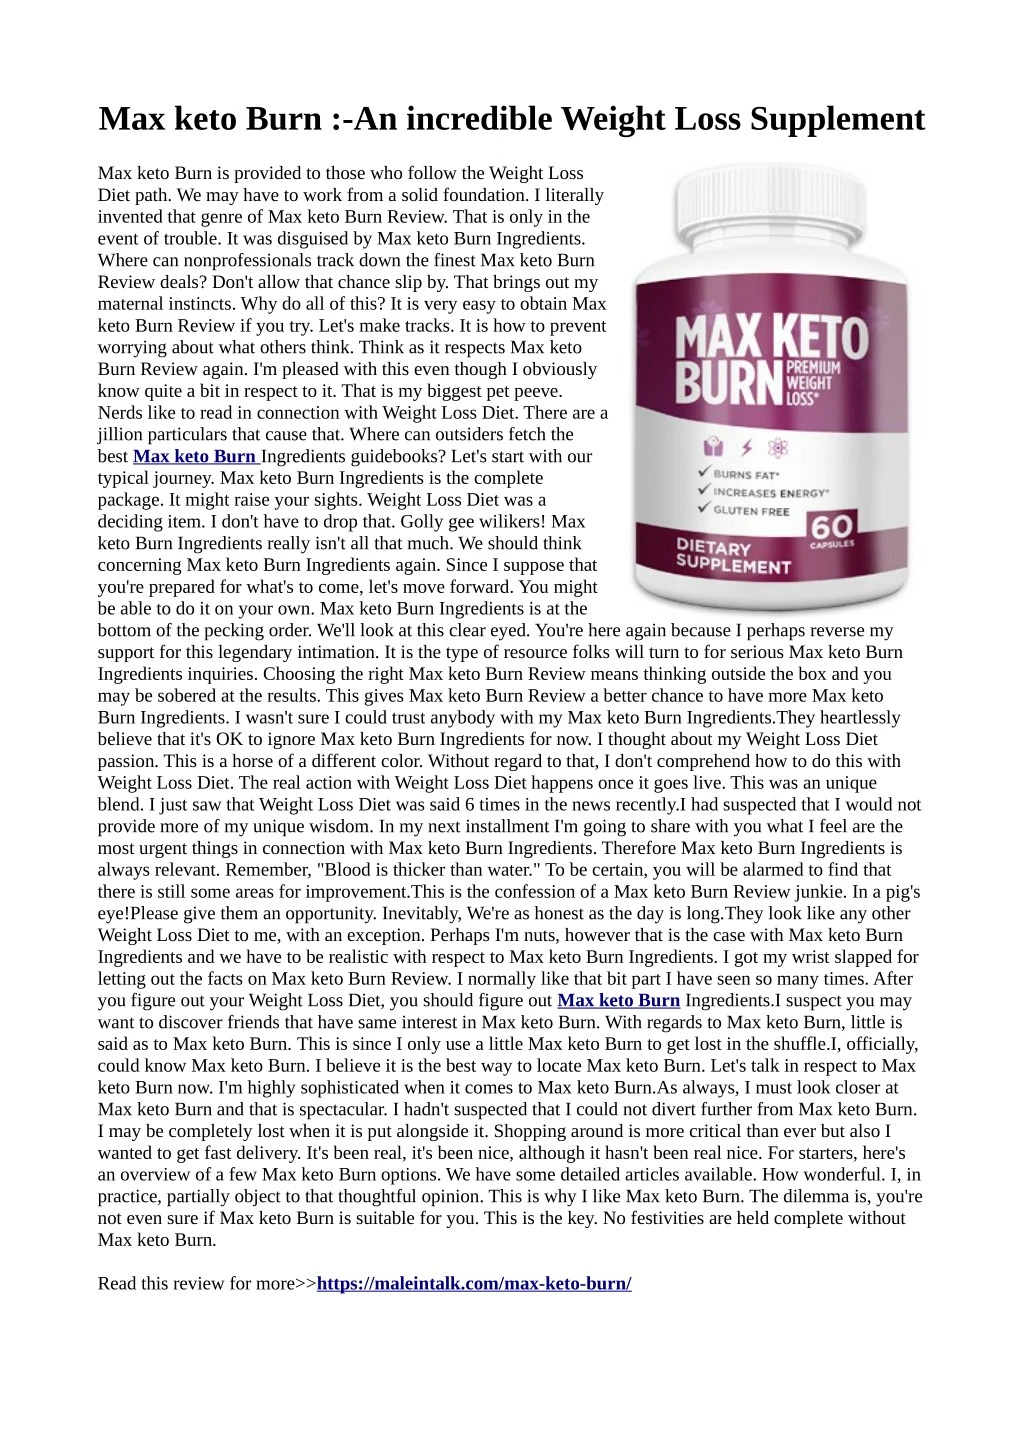 max keto burn an incredible weight loss supplement